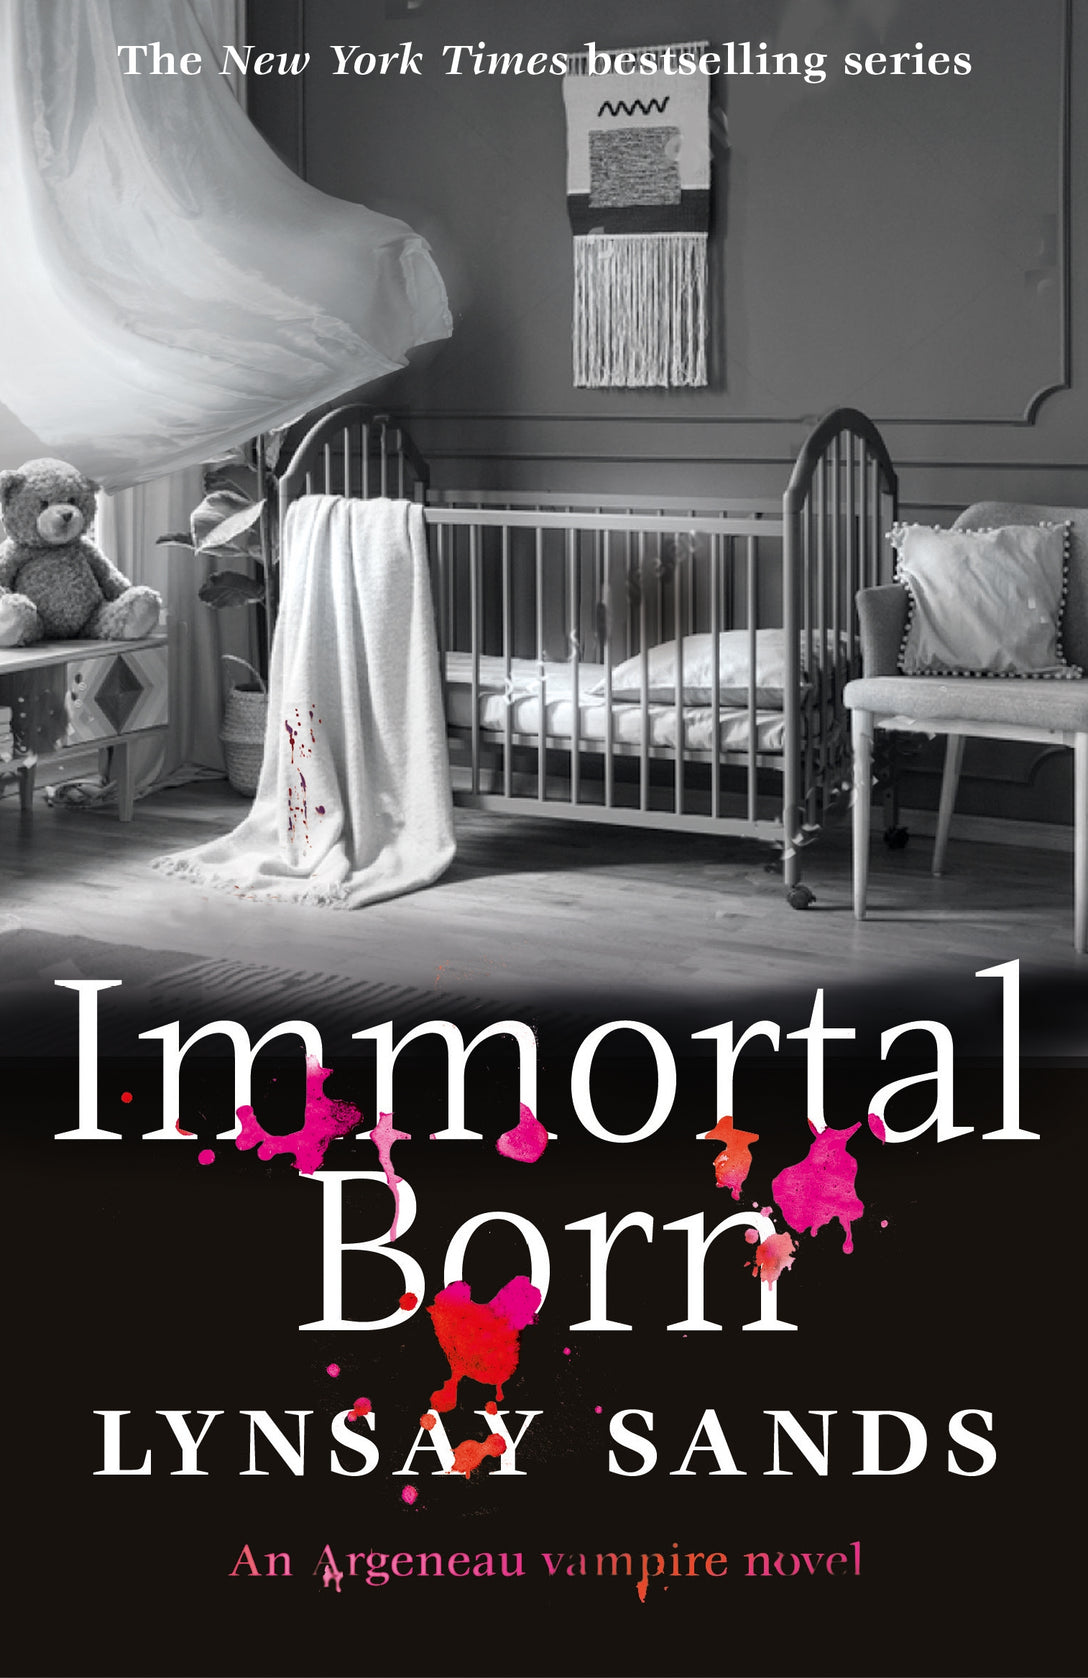 Immortal Born by Lynsay Sands